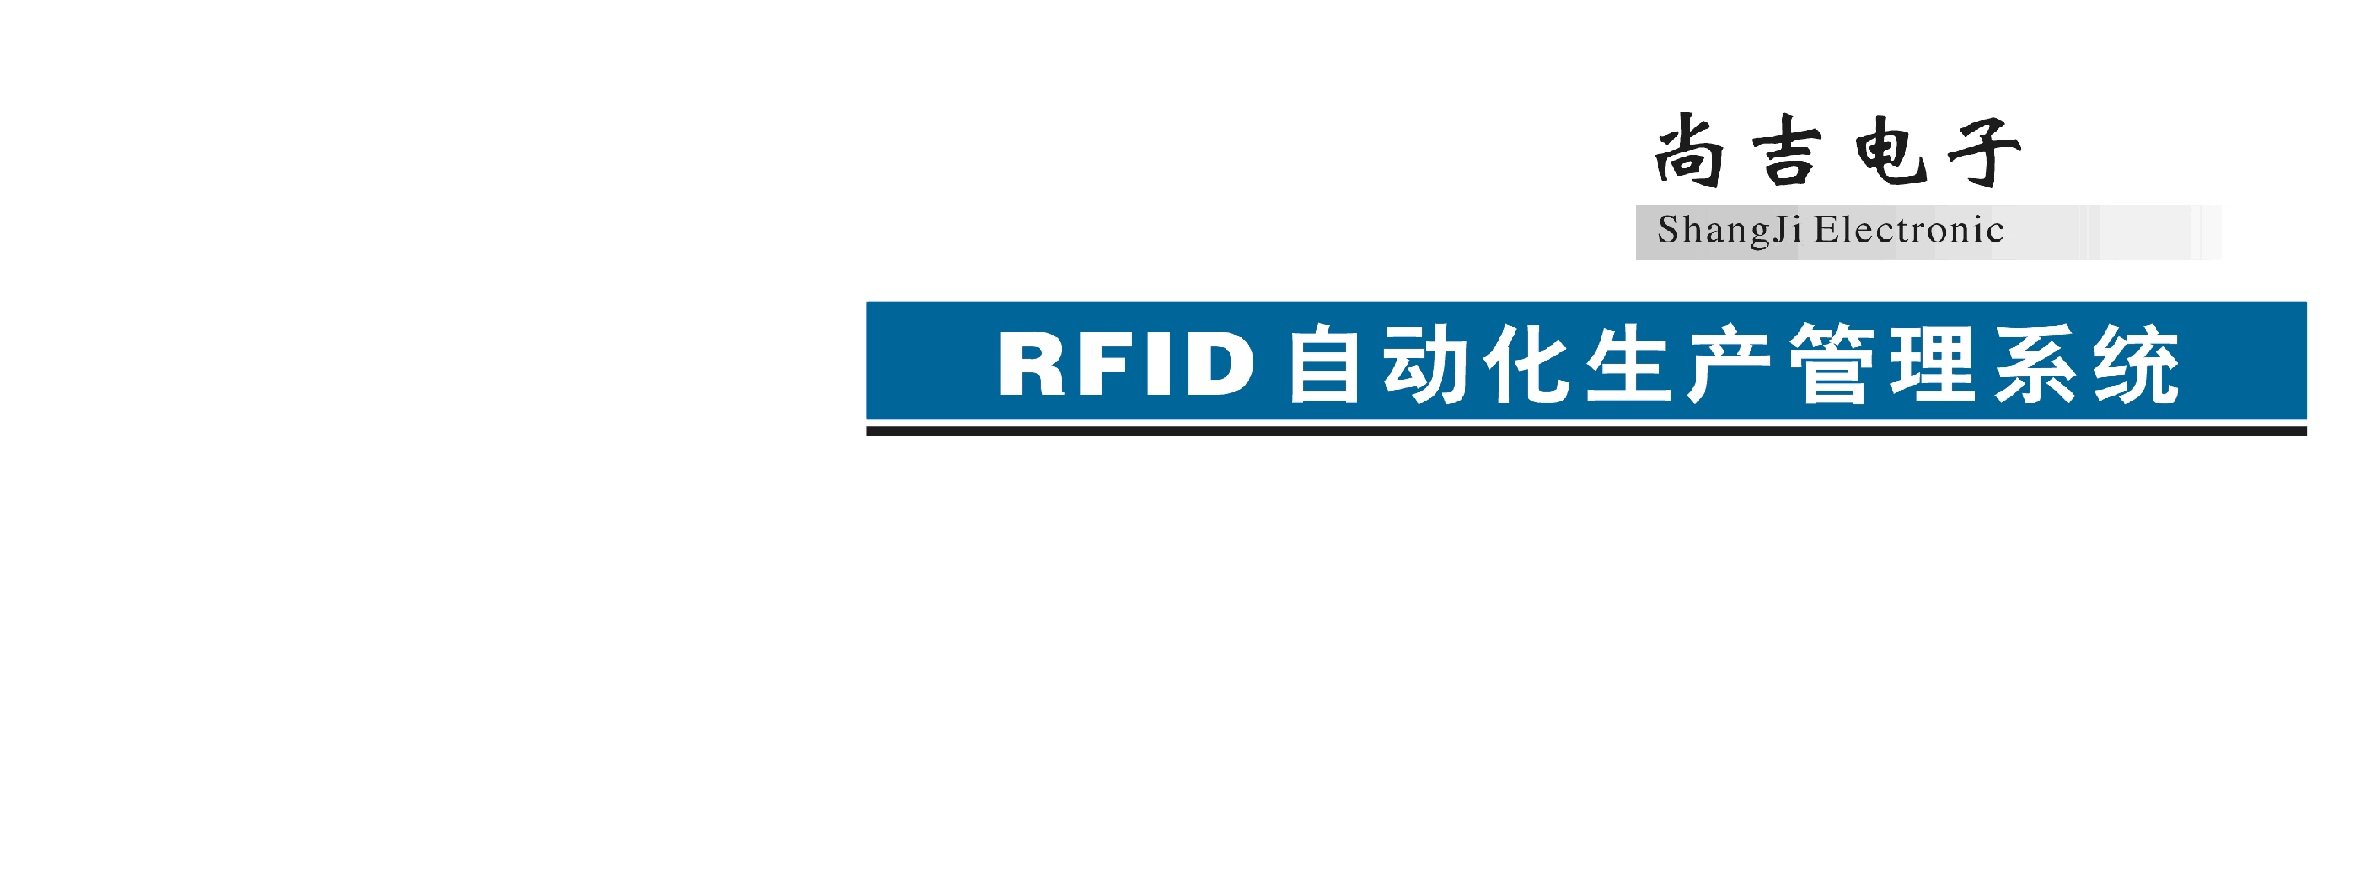 RFID在印刷生产管理中的应用